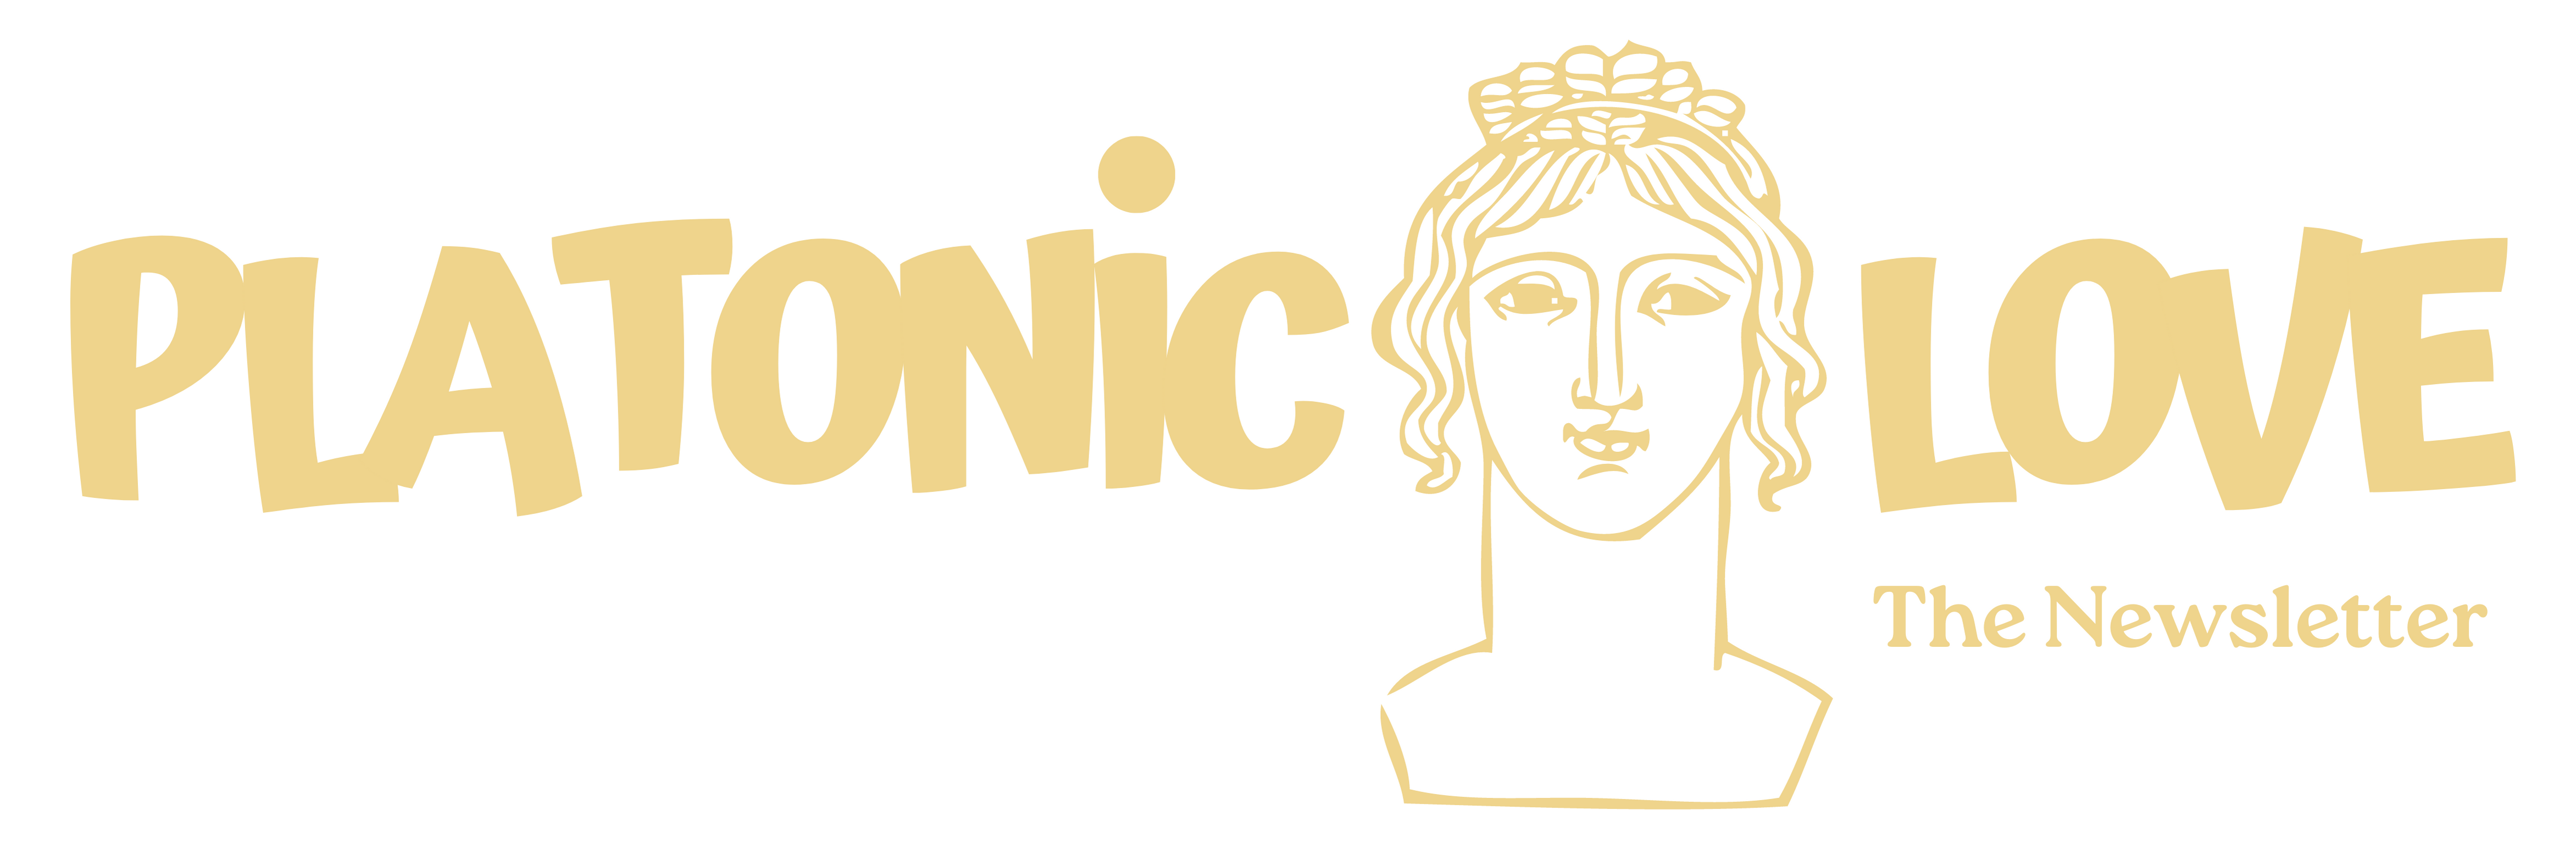 Platonic Love logo